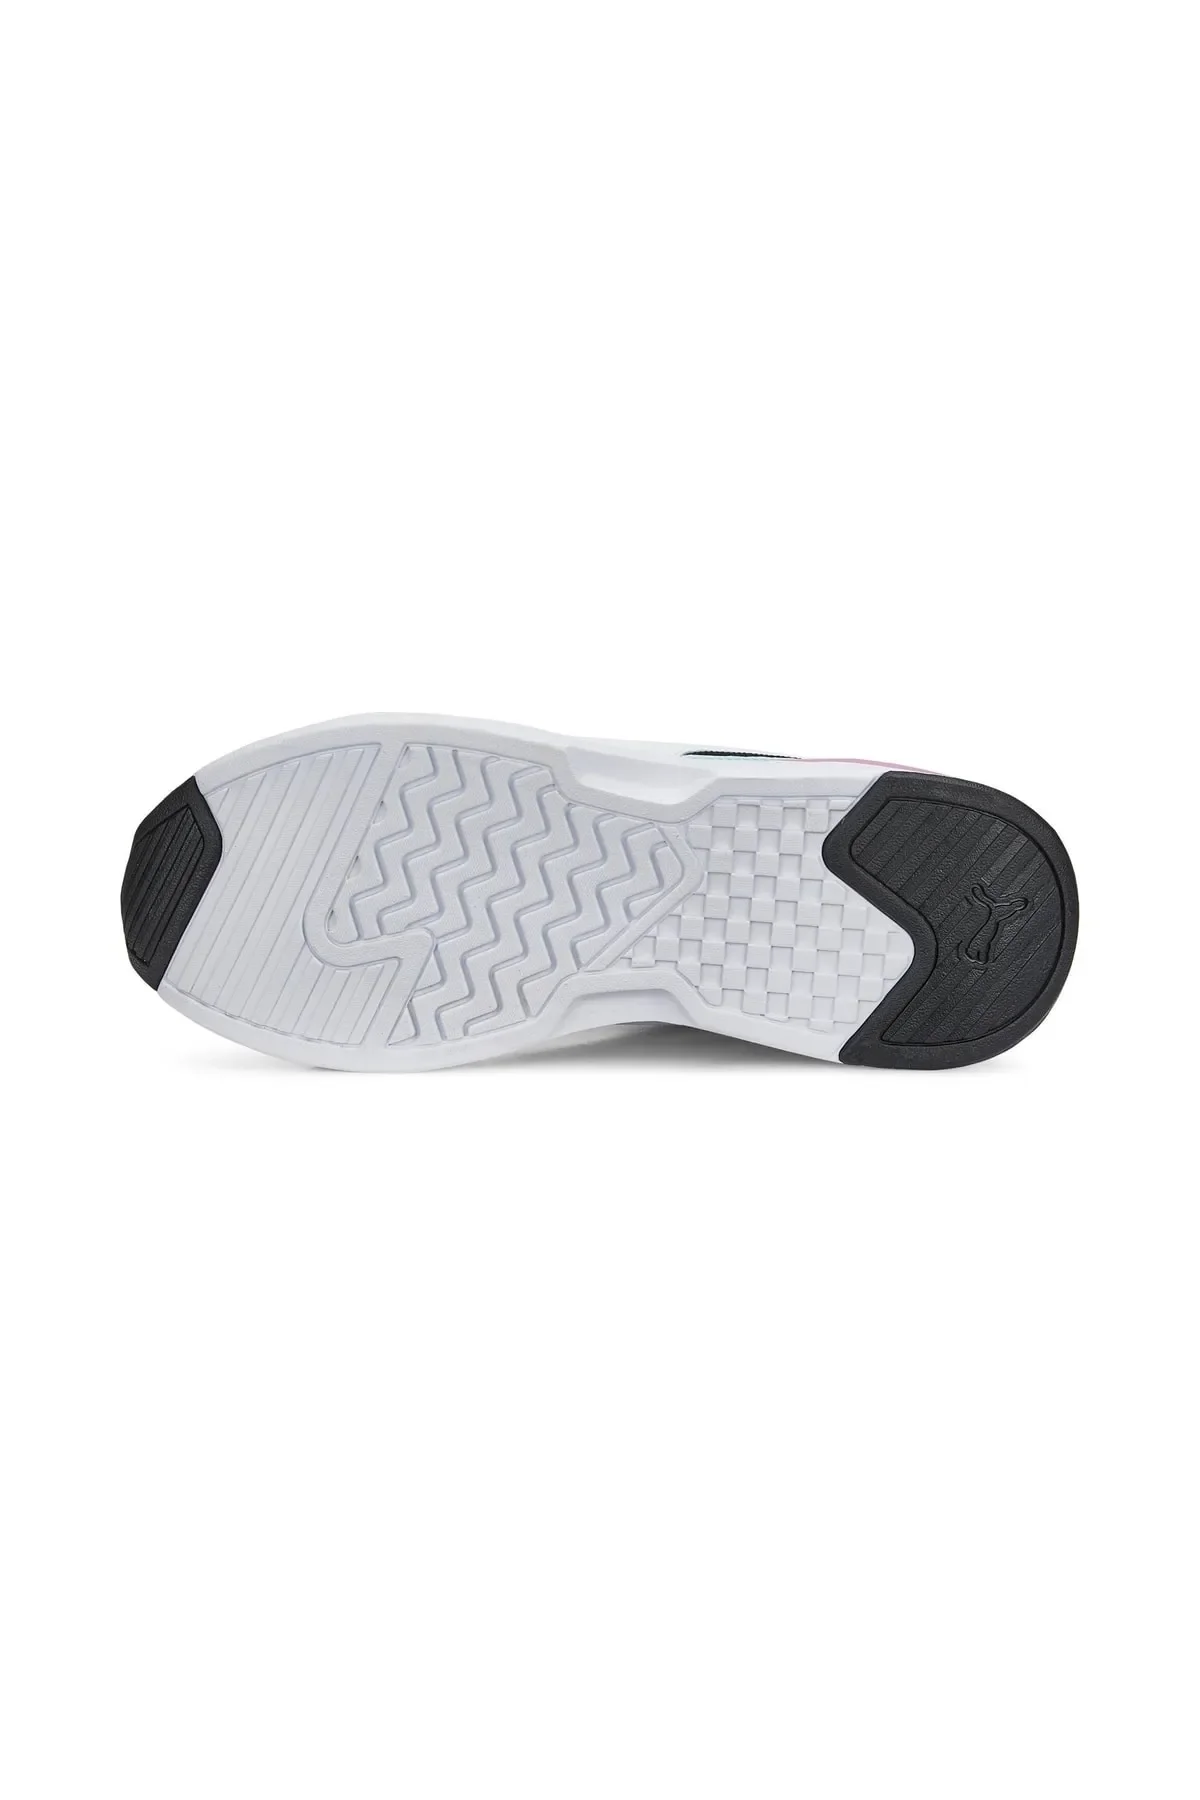 X-Ray Speed Lite - Kadın Sneaker Ayakkabı 384639 -Siyah - 6